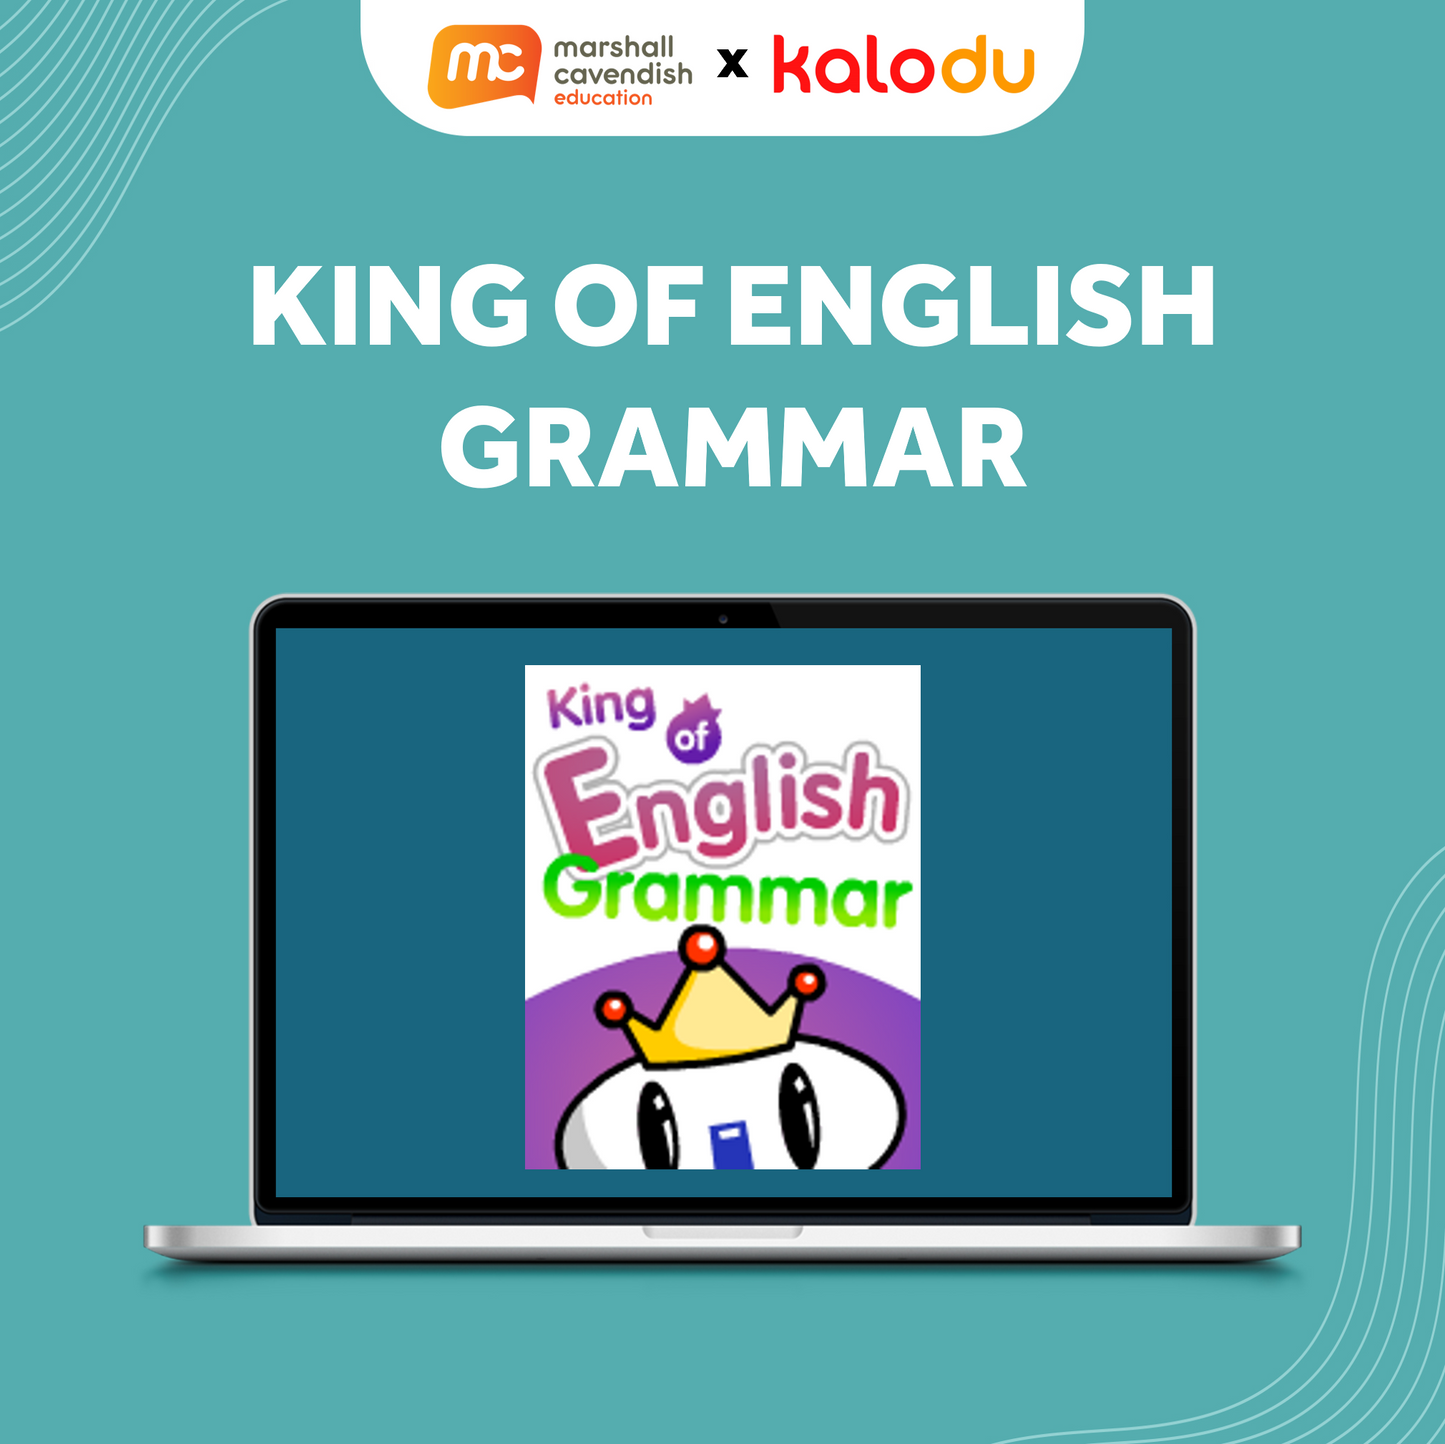 Learn Grammar with King of English Grammar